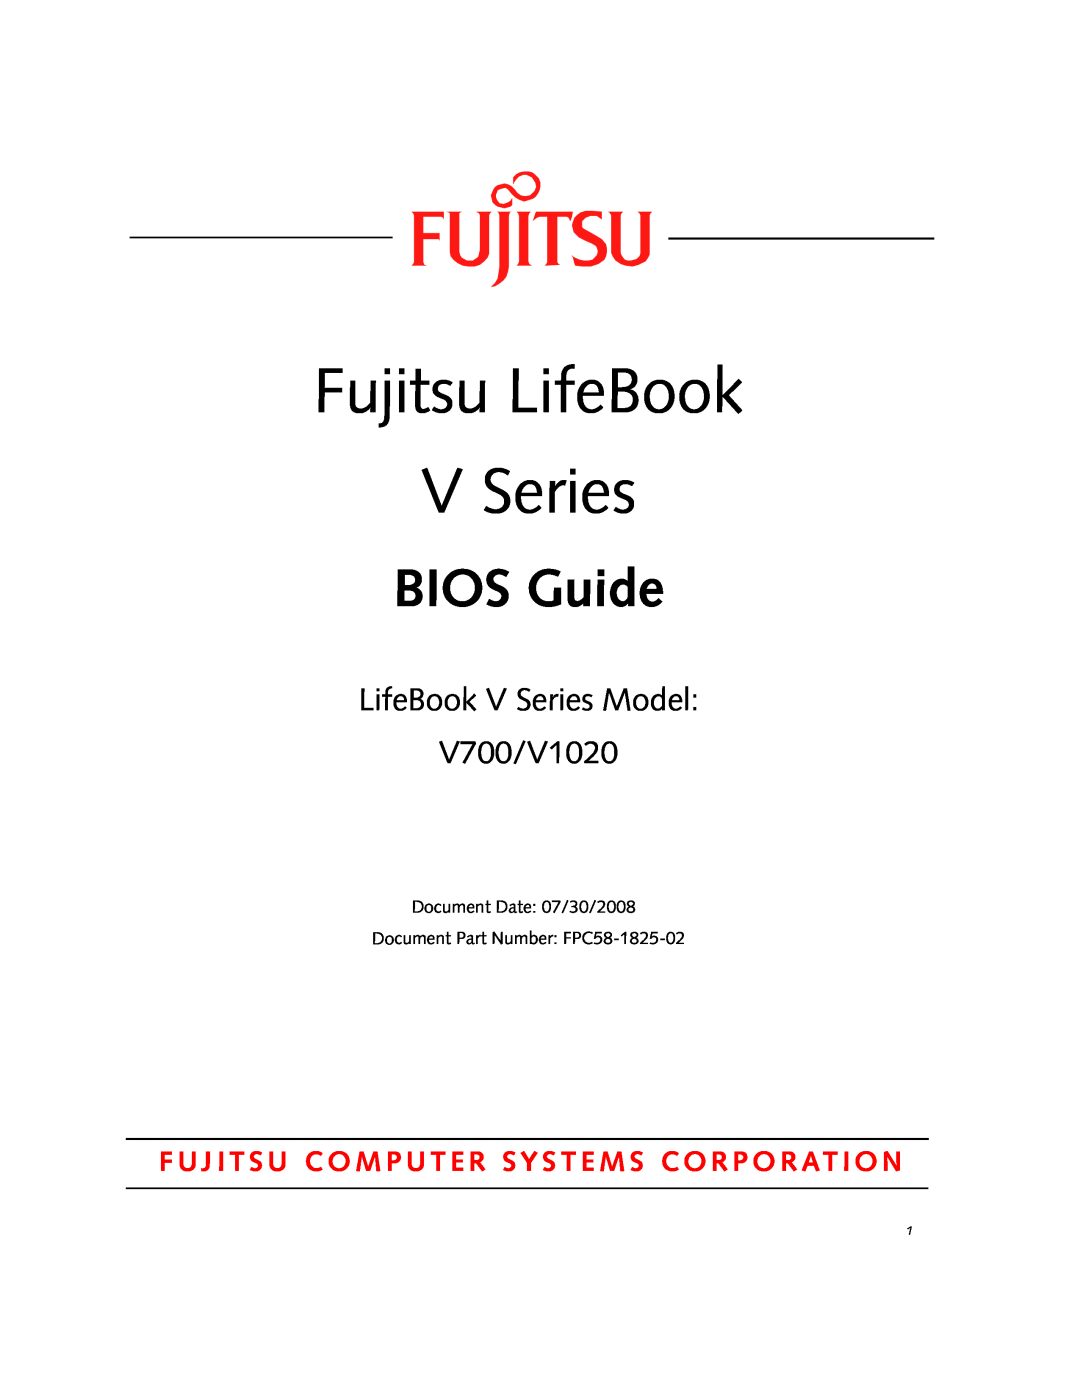 Fujitsu manual Fujitsu LifeBook V Series, BIOS Guide, LifeBook V Series Model V700/V1020 